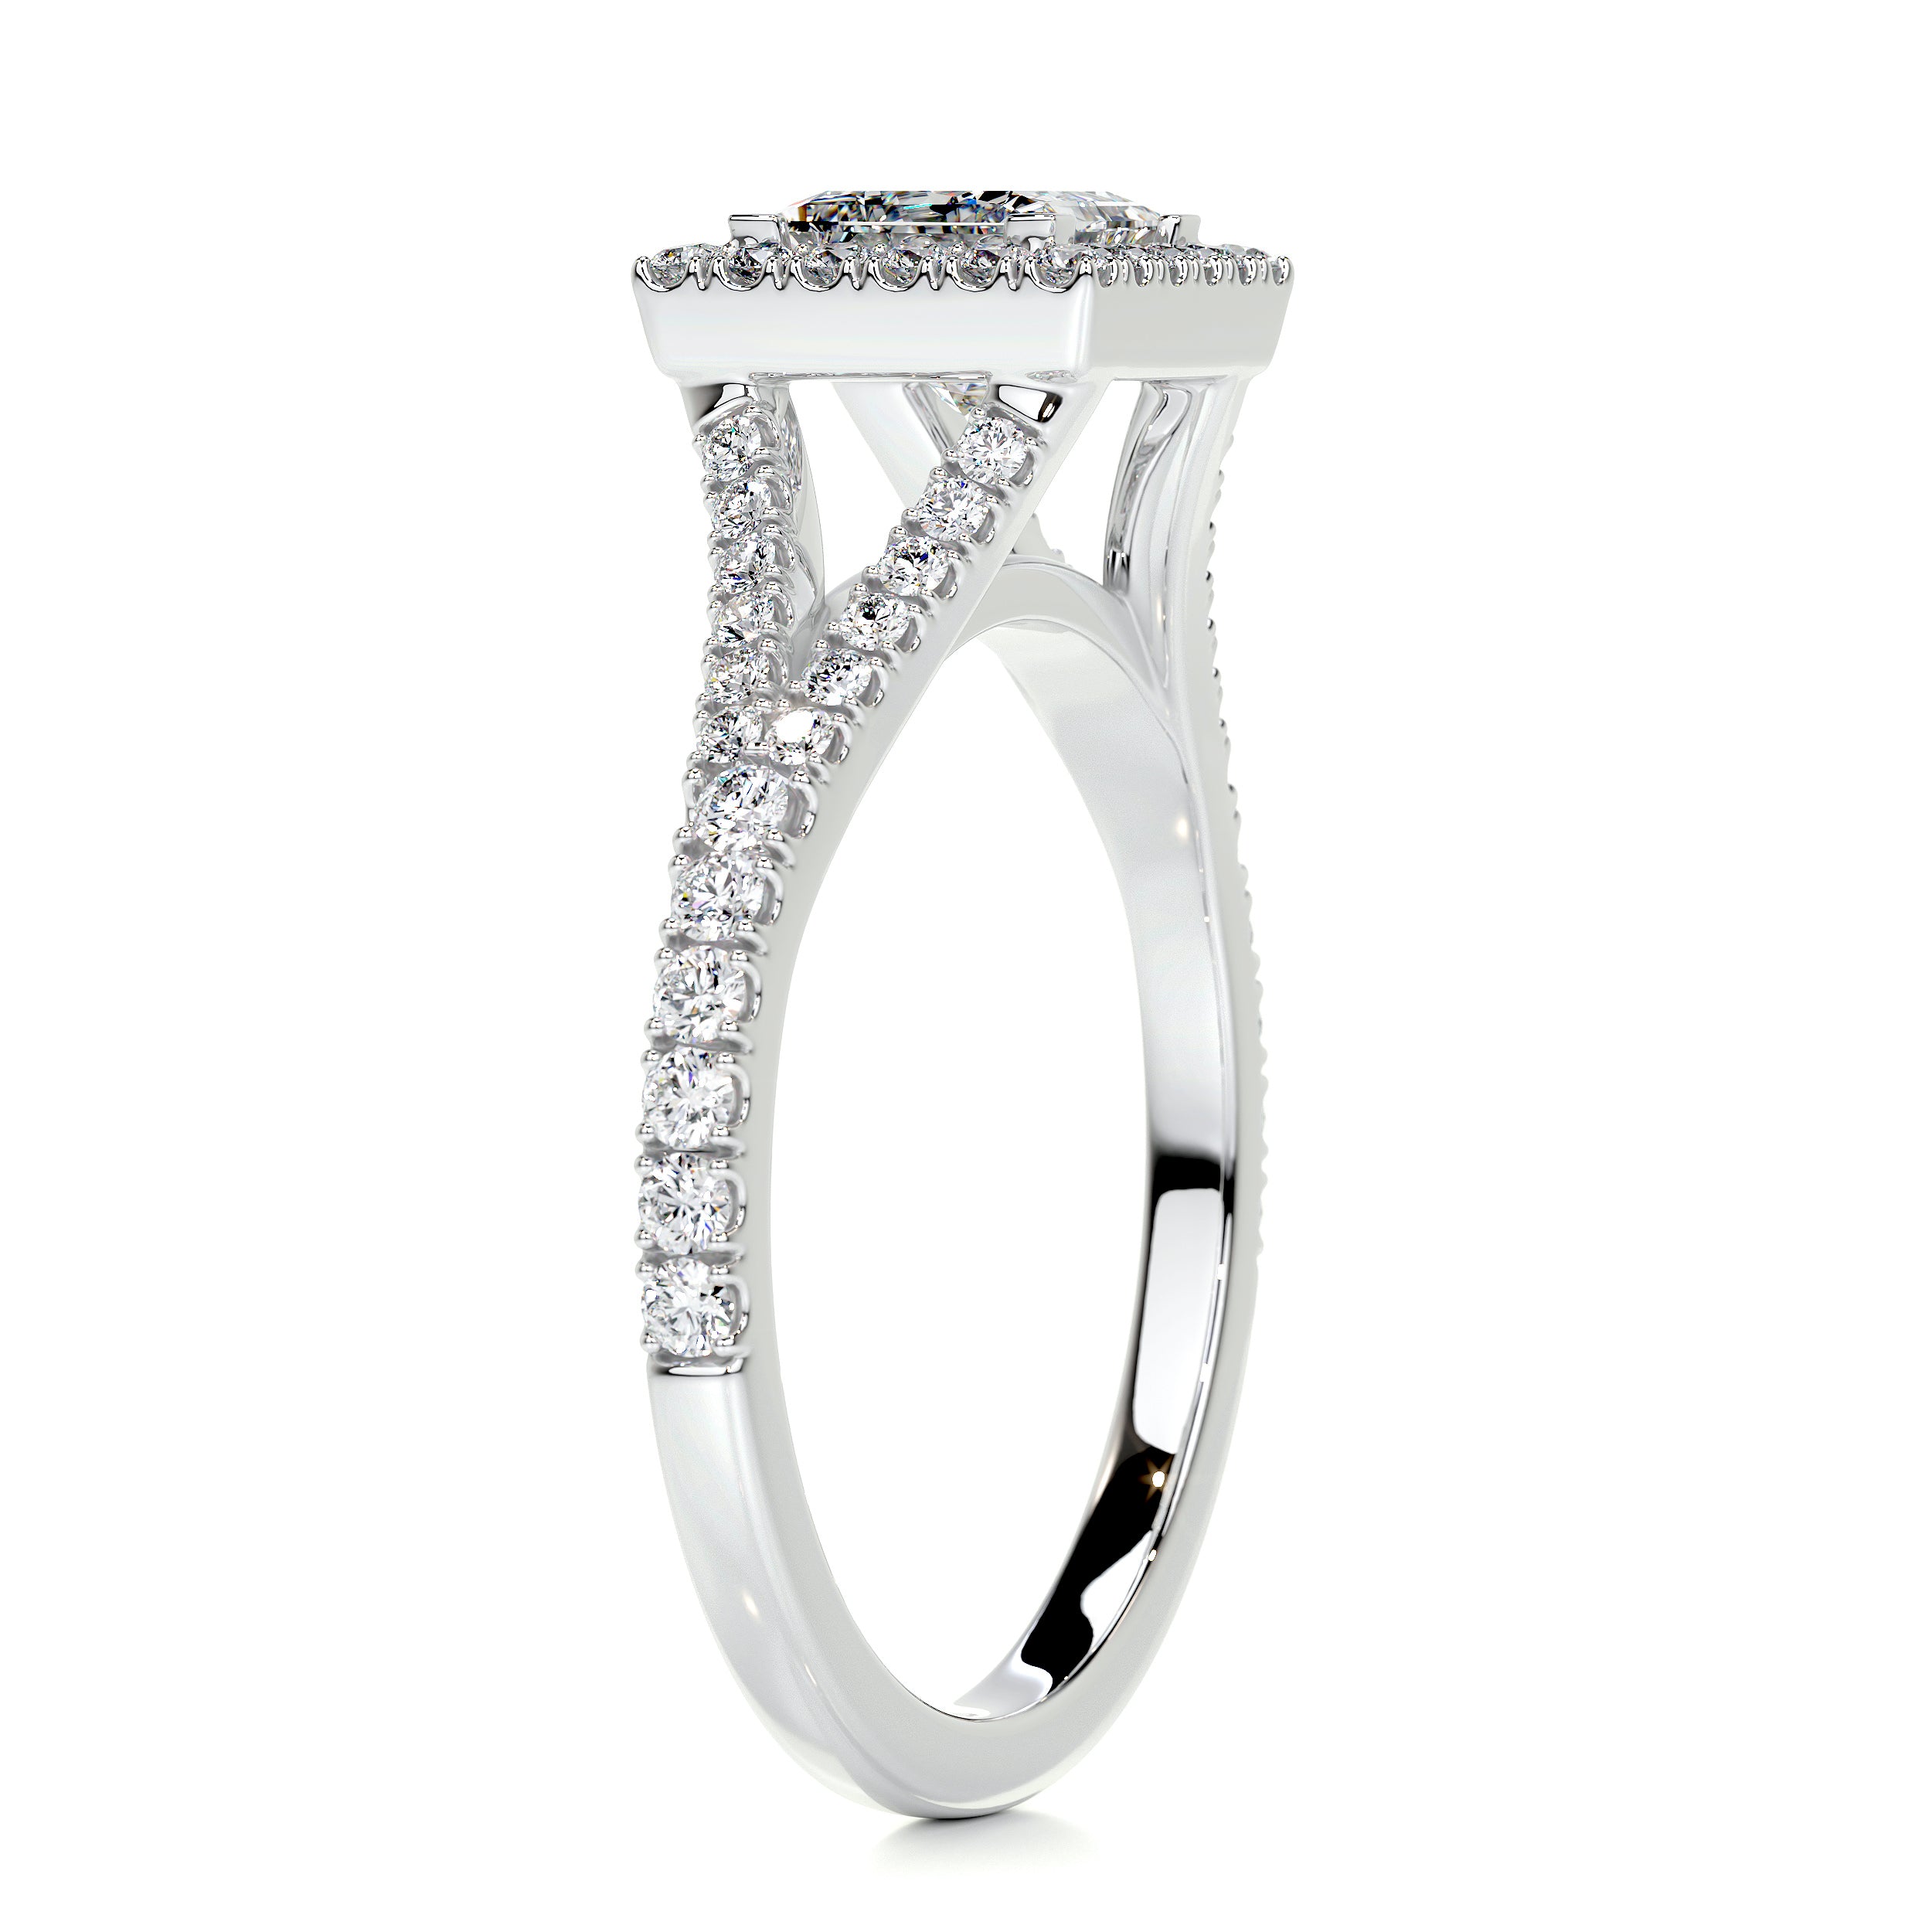 Celia Diamond Engagement Ring   (1.25 Carat) -14K White Gold